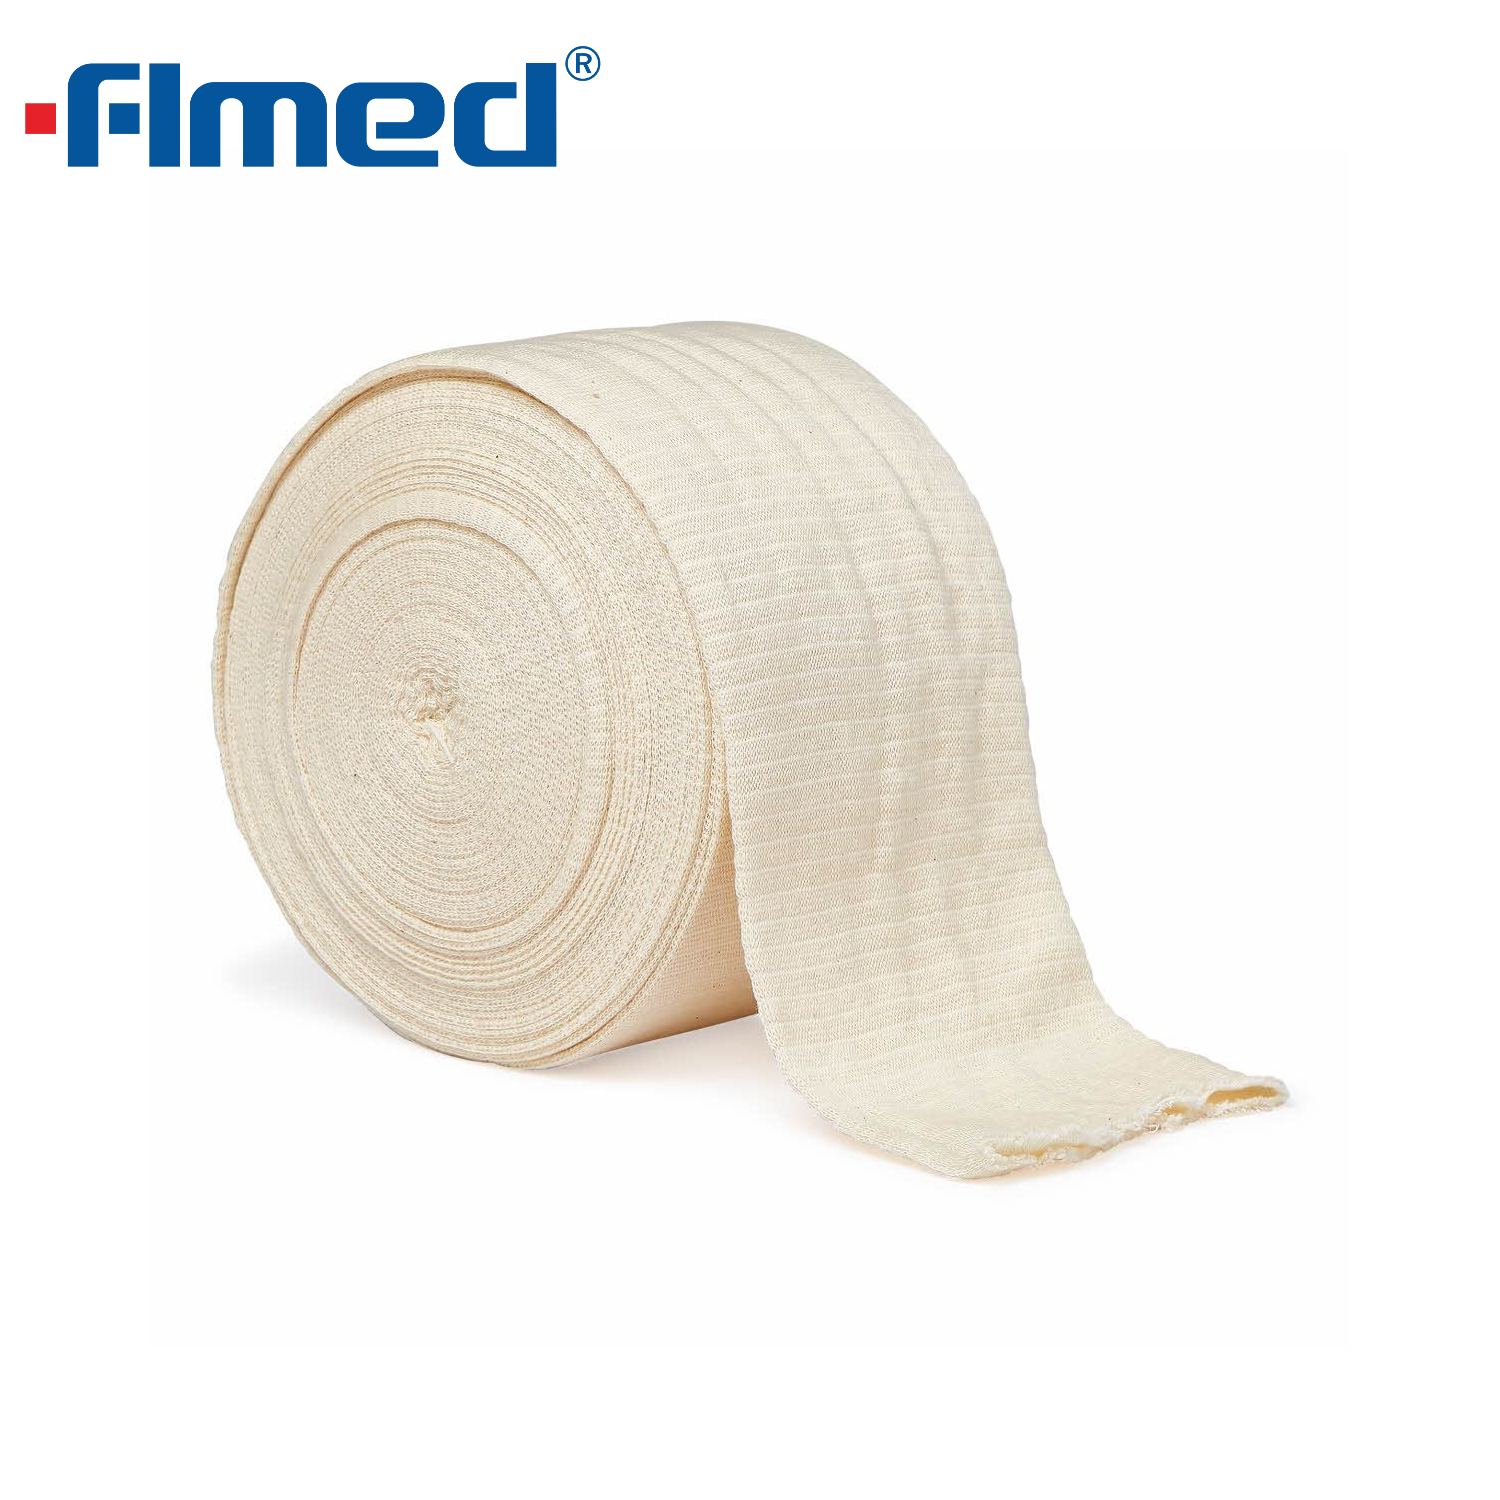 Tıbbi bandajlar elastik boru şeklindeki bandaj 10 metre